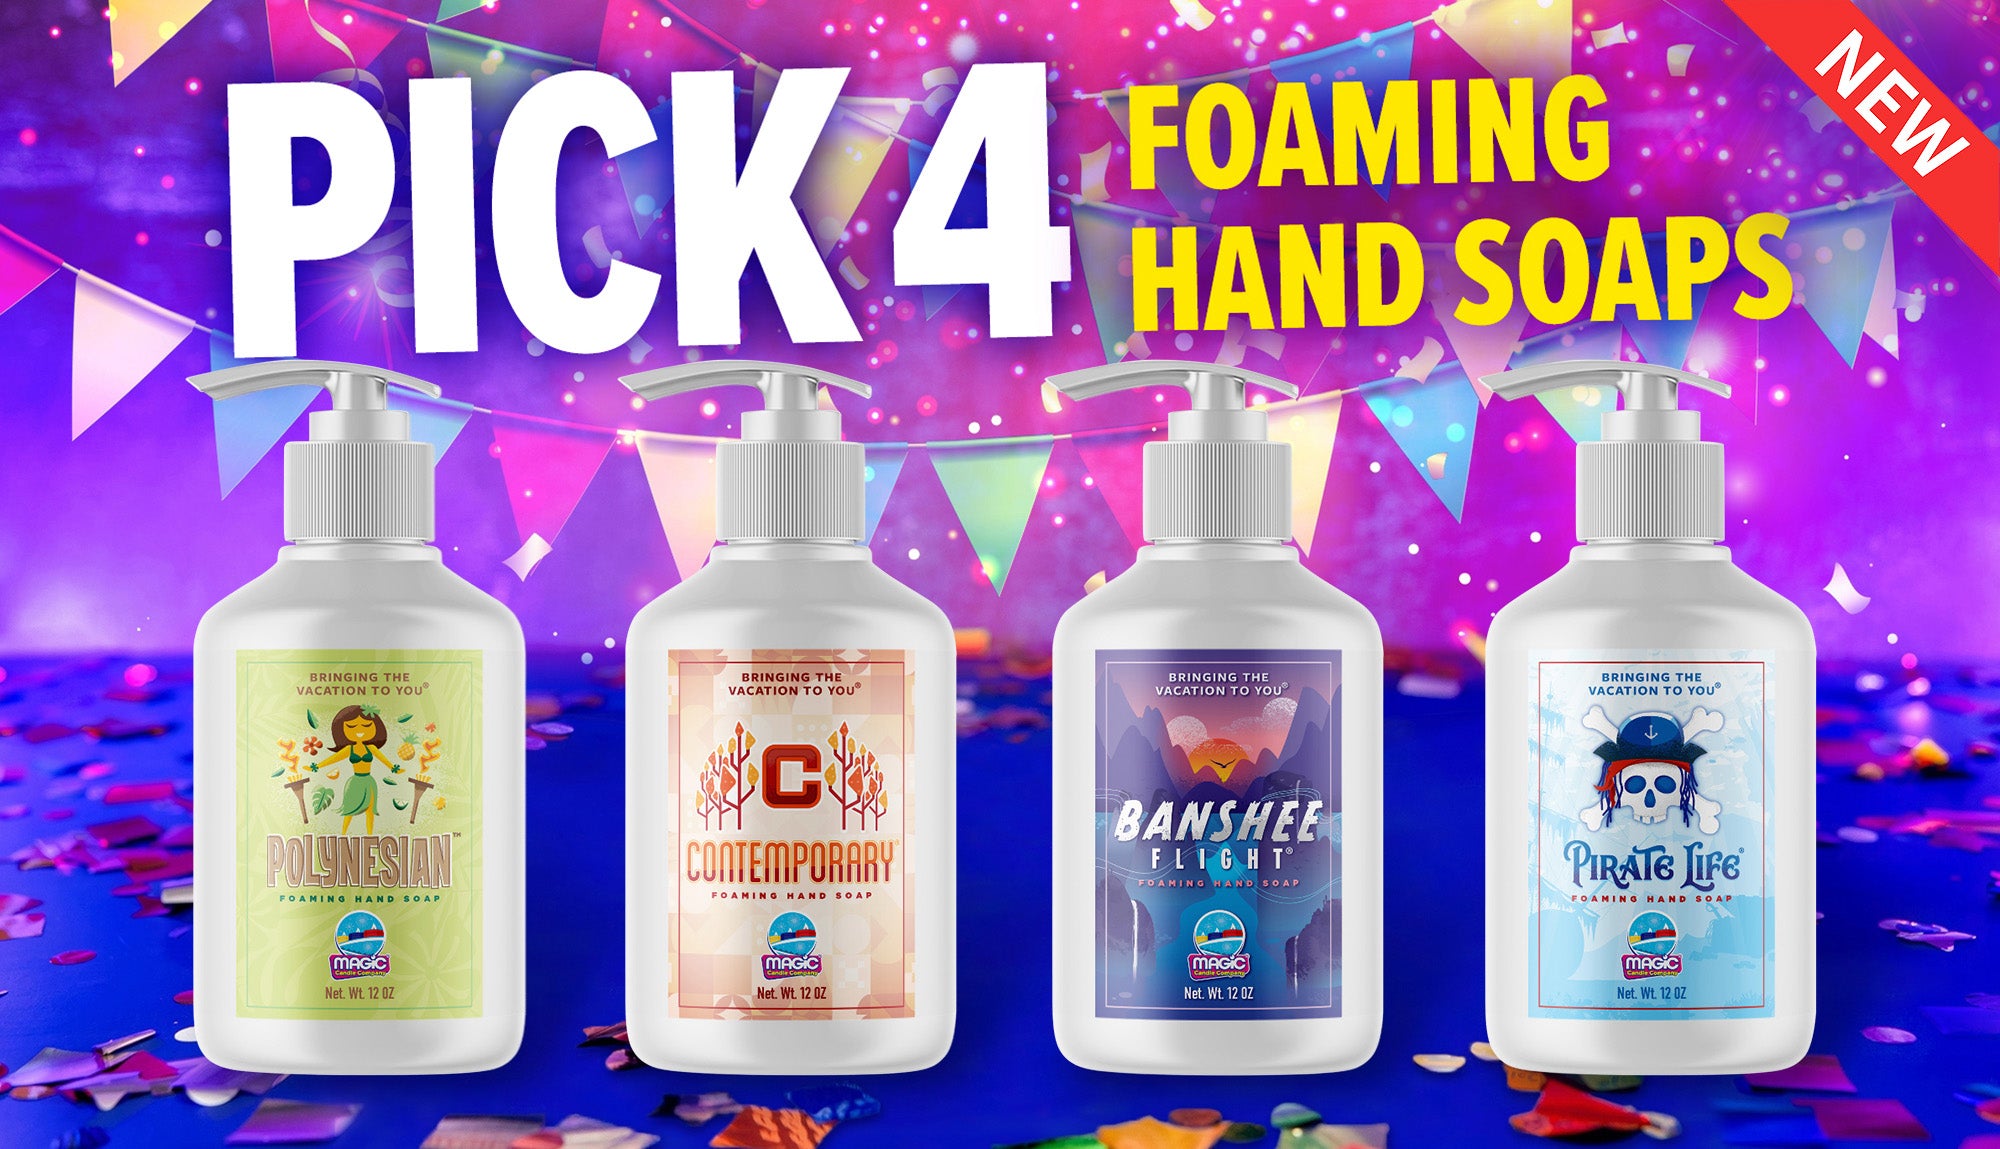 Pick 4 Foaming Hand Soaps